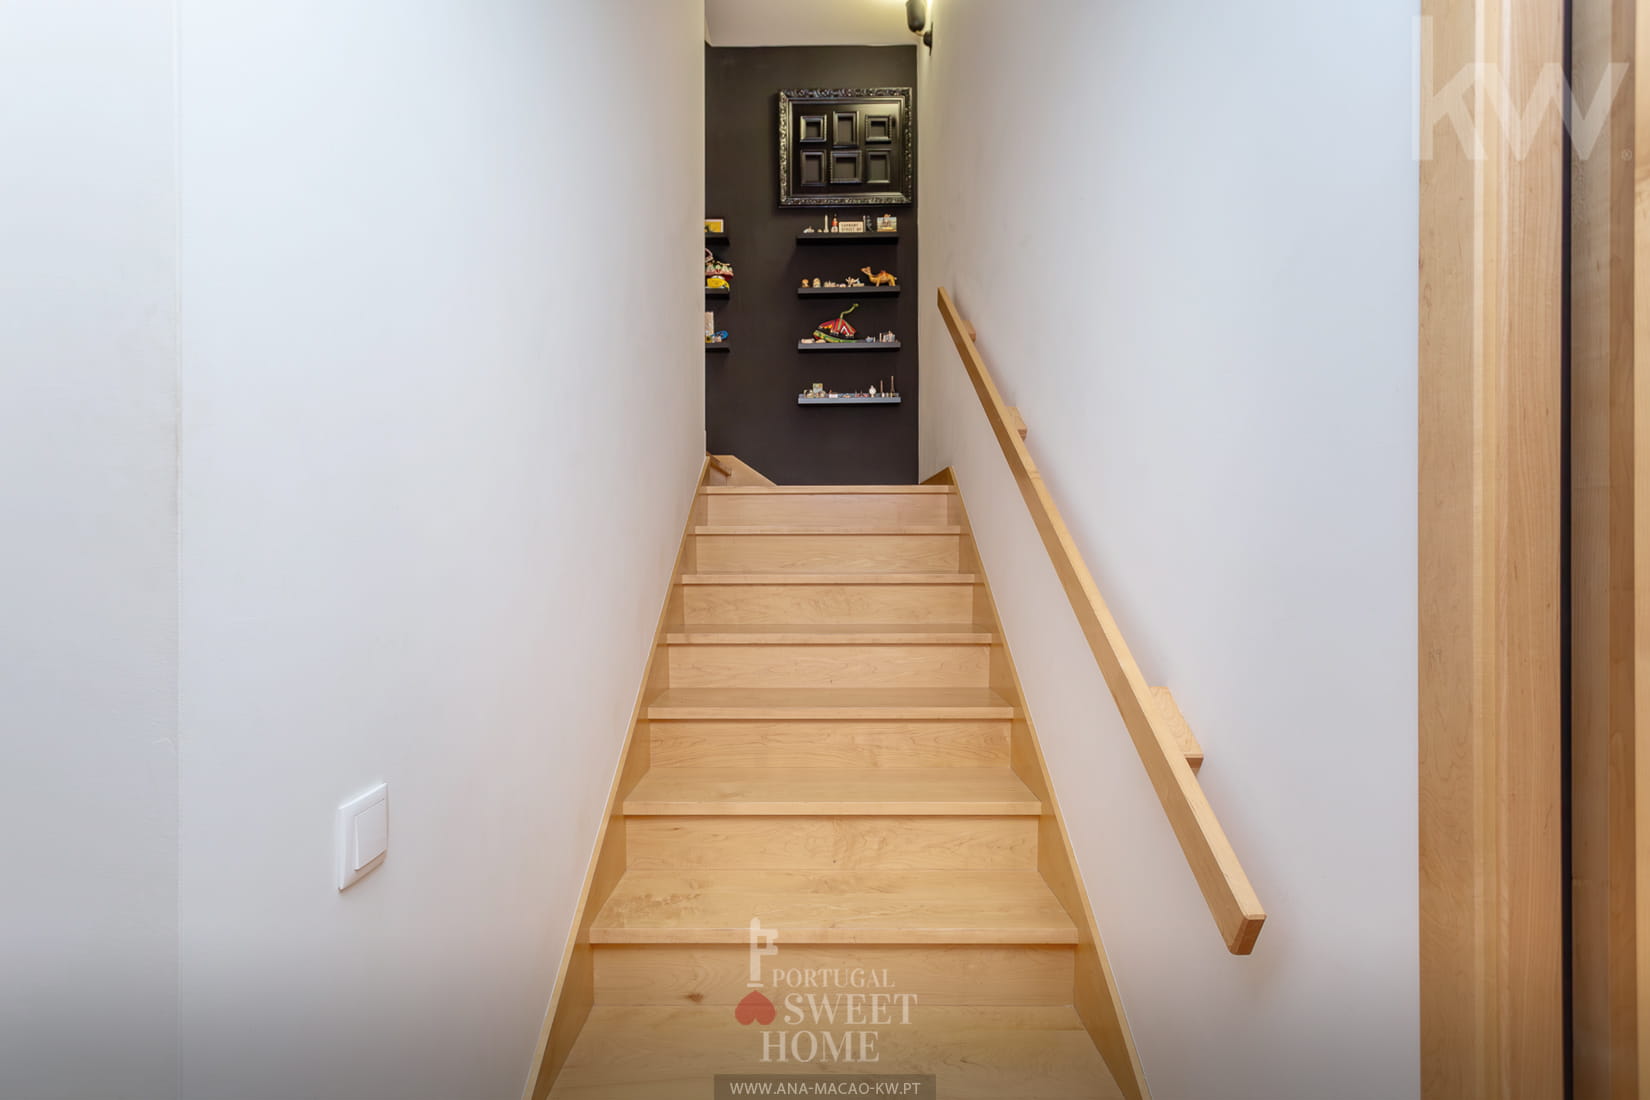 Access stairs between floors